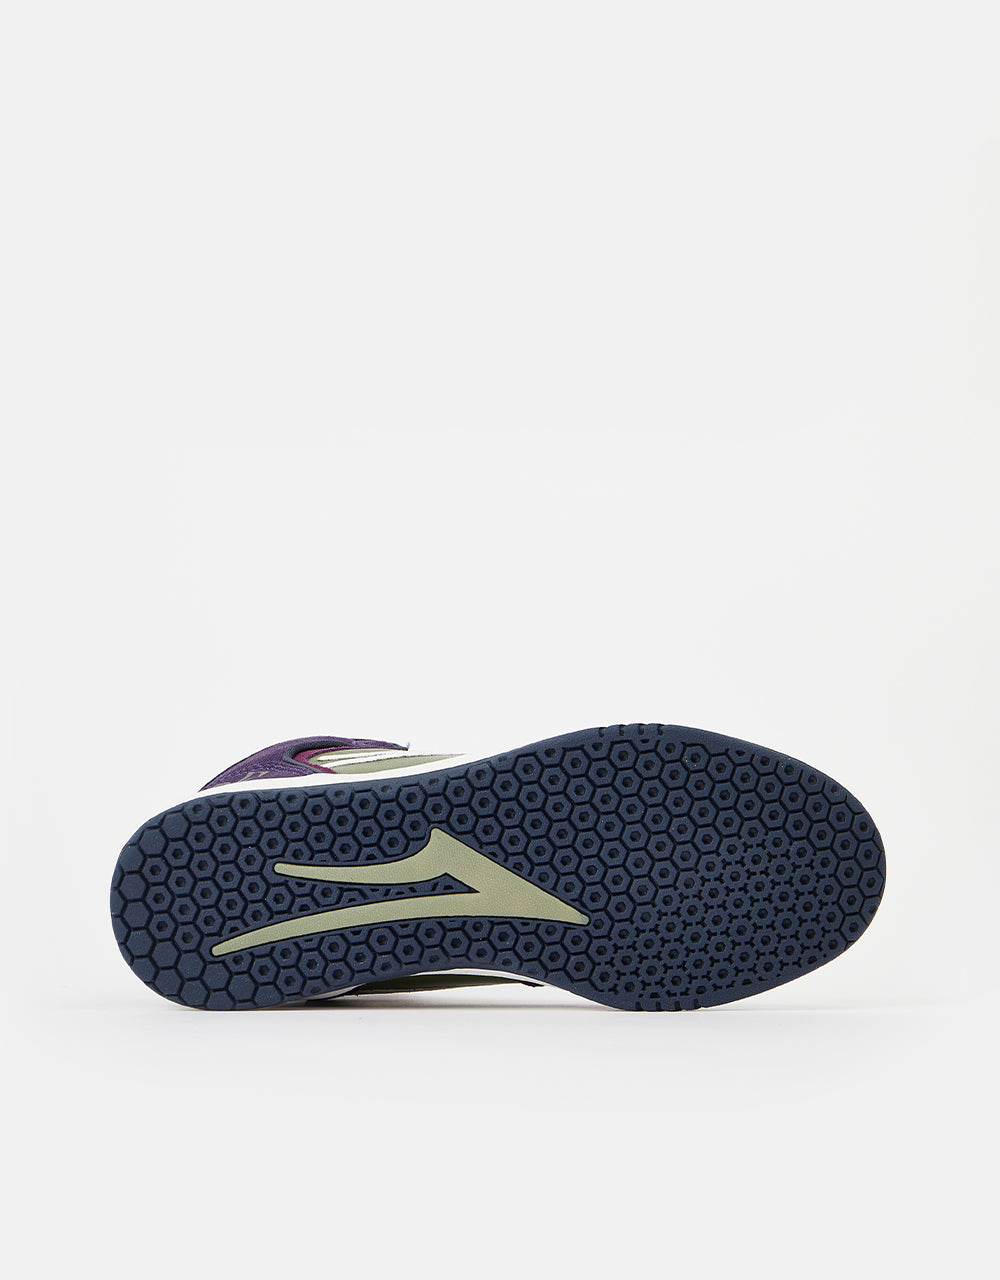 Lakai x The Pharcyde Telford Skate Shoes - Grape/Olive Suede